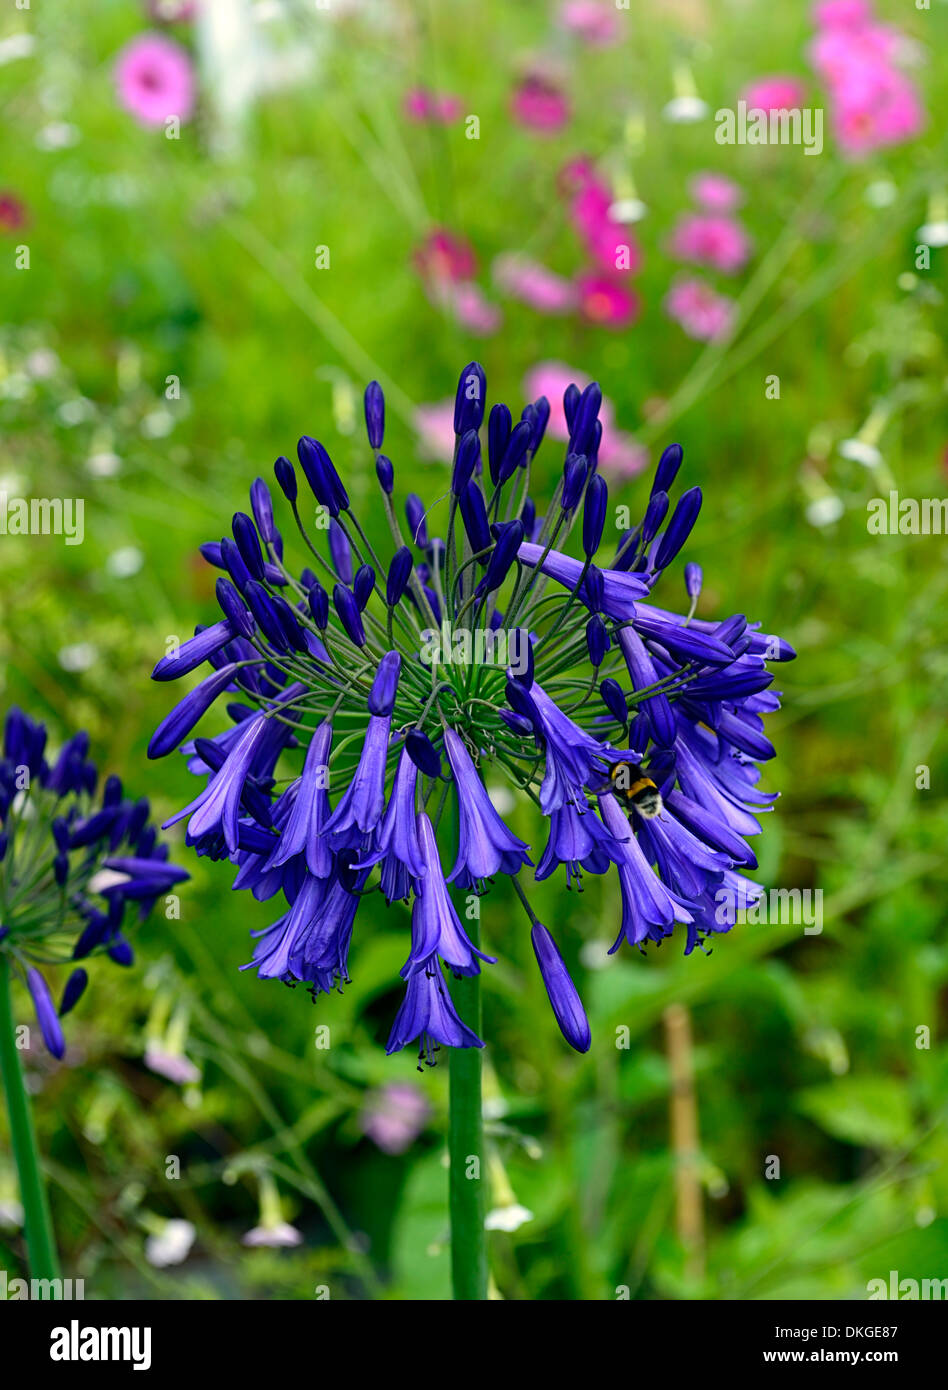 Agapanthus Africanus Purple Cloud Schmucklilie Pflanze Porträts Blumen  Stauden Blüte lila blaue Blüte blüht Stockfotografie - Alamy